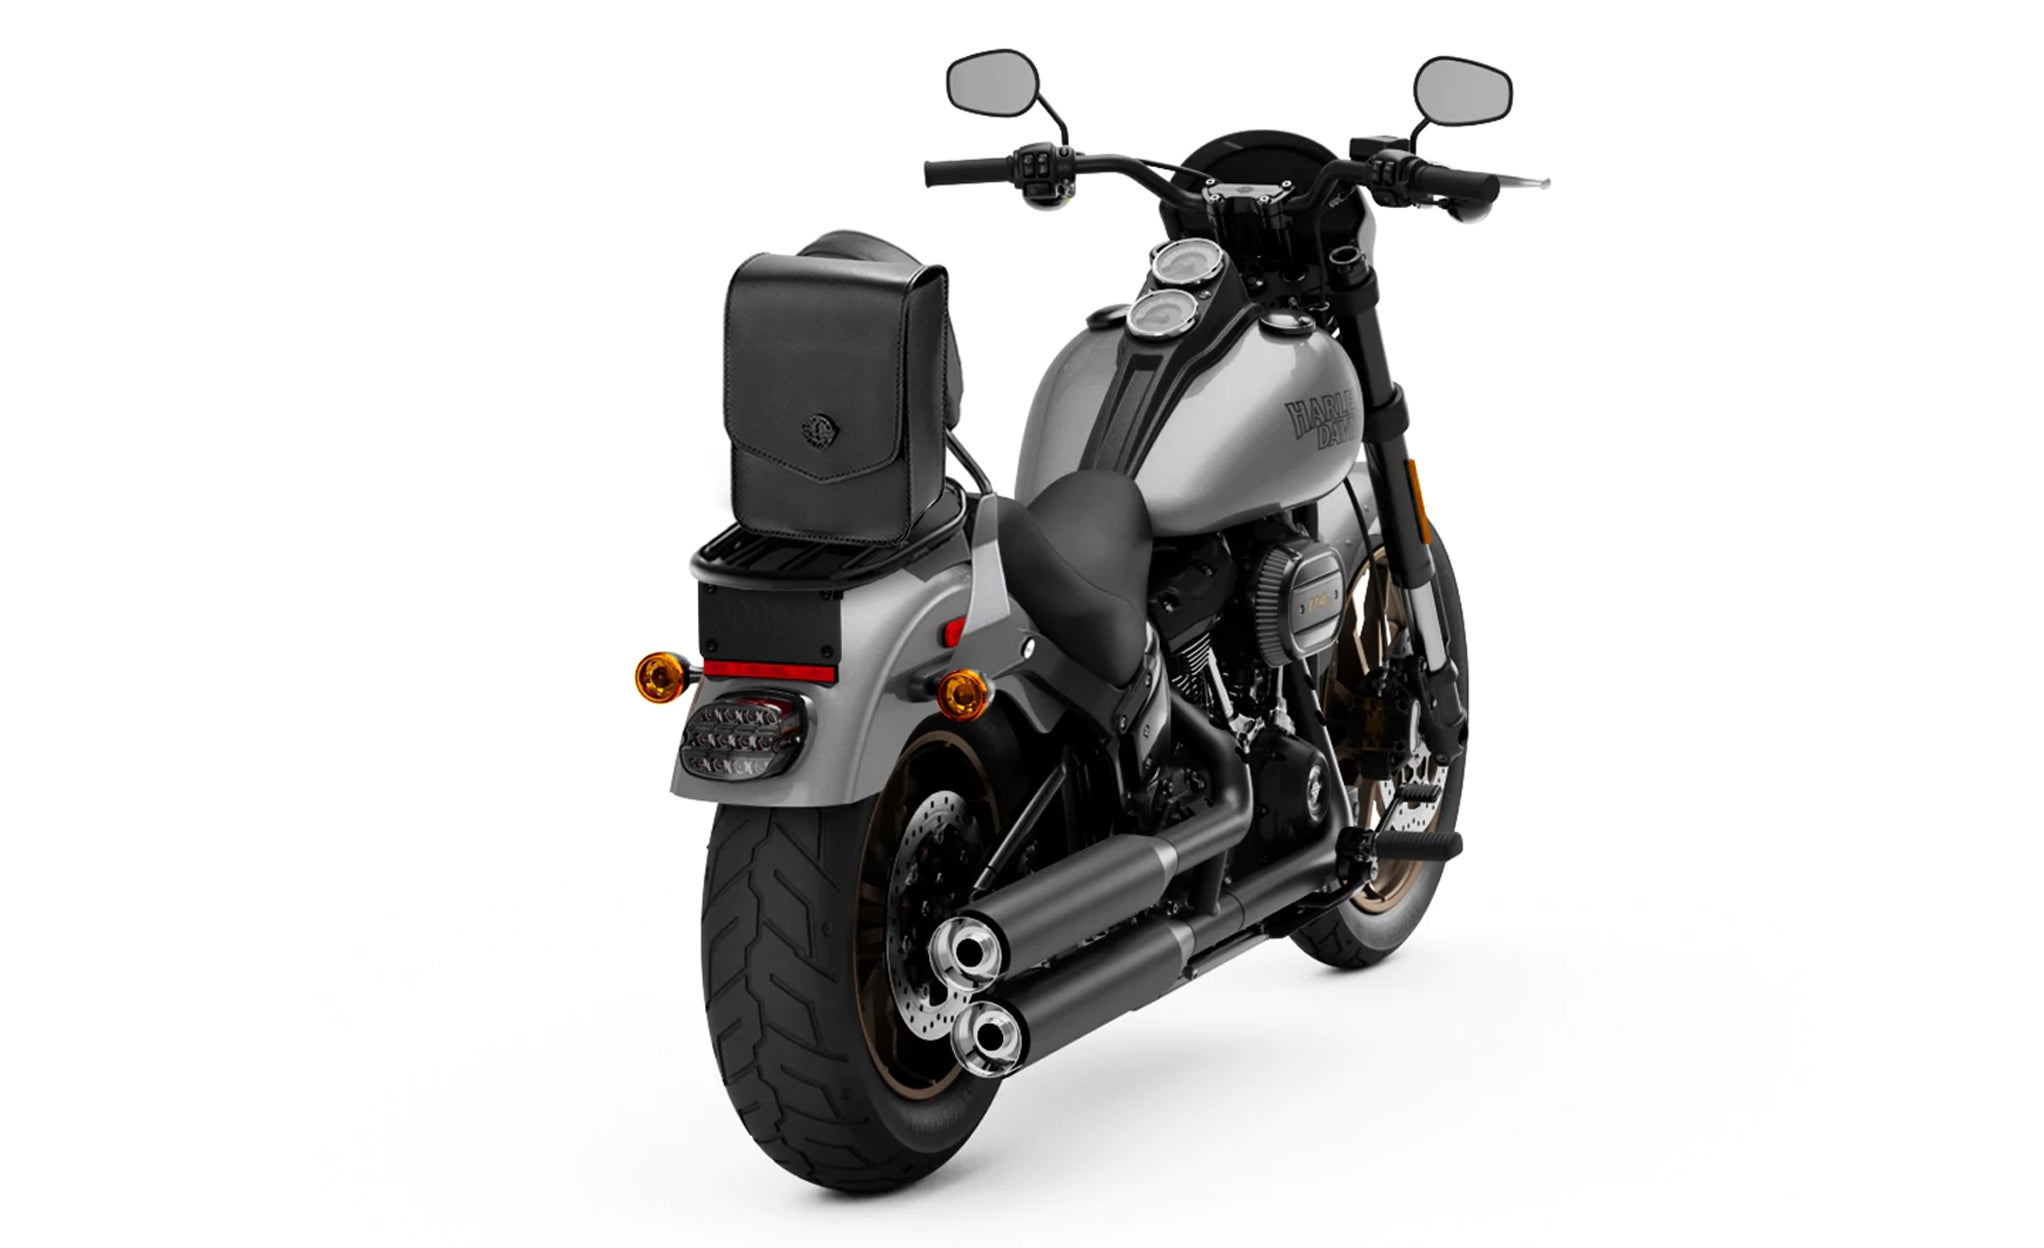 Viking Dark Age Small Honda Motorcycle Sissy Bar Bag Bag on Bike View @expand